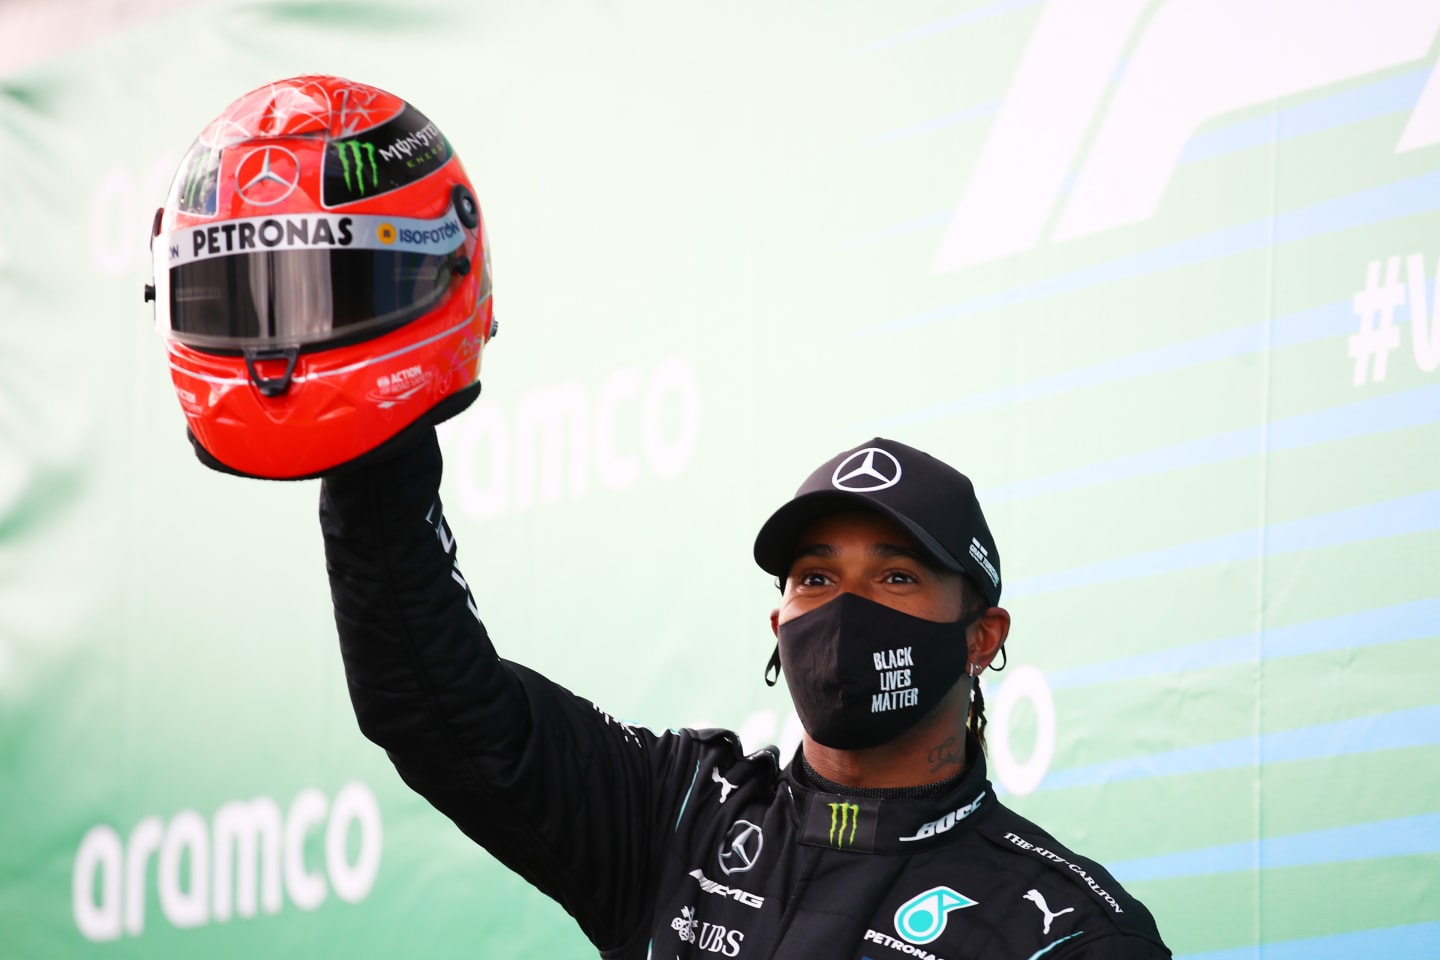 NUERBURG, GERMANY - OCTOBER 11: Race winner Lewis Hamilton of Great Britain and Mercedes GP